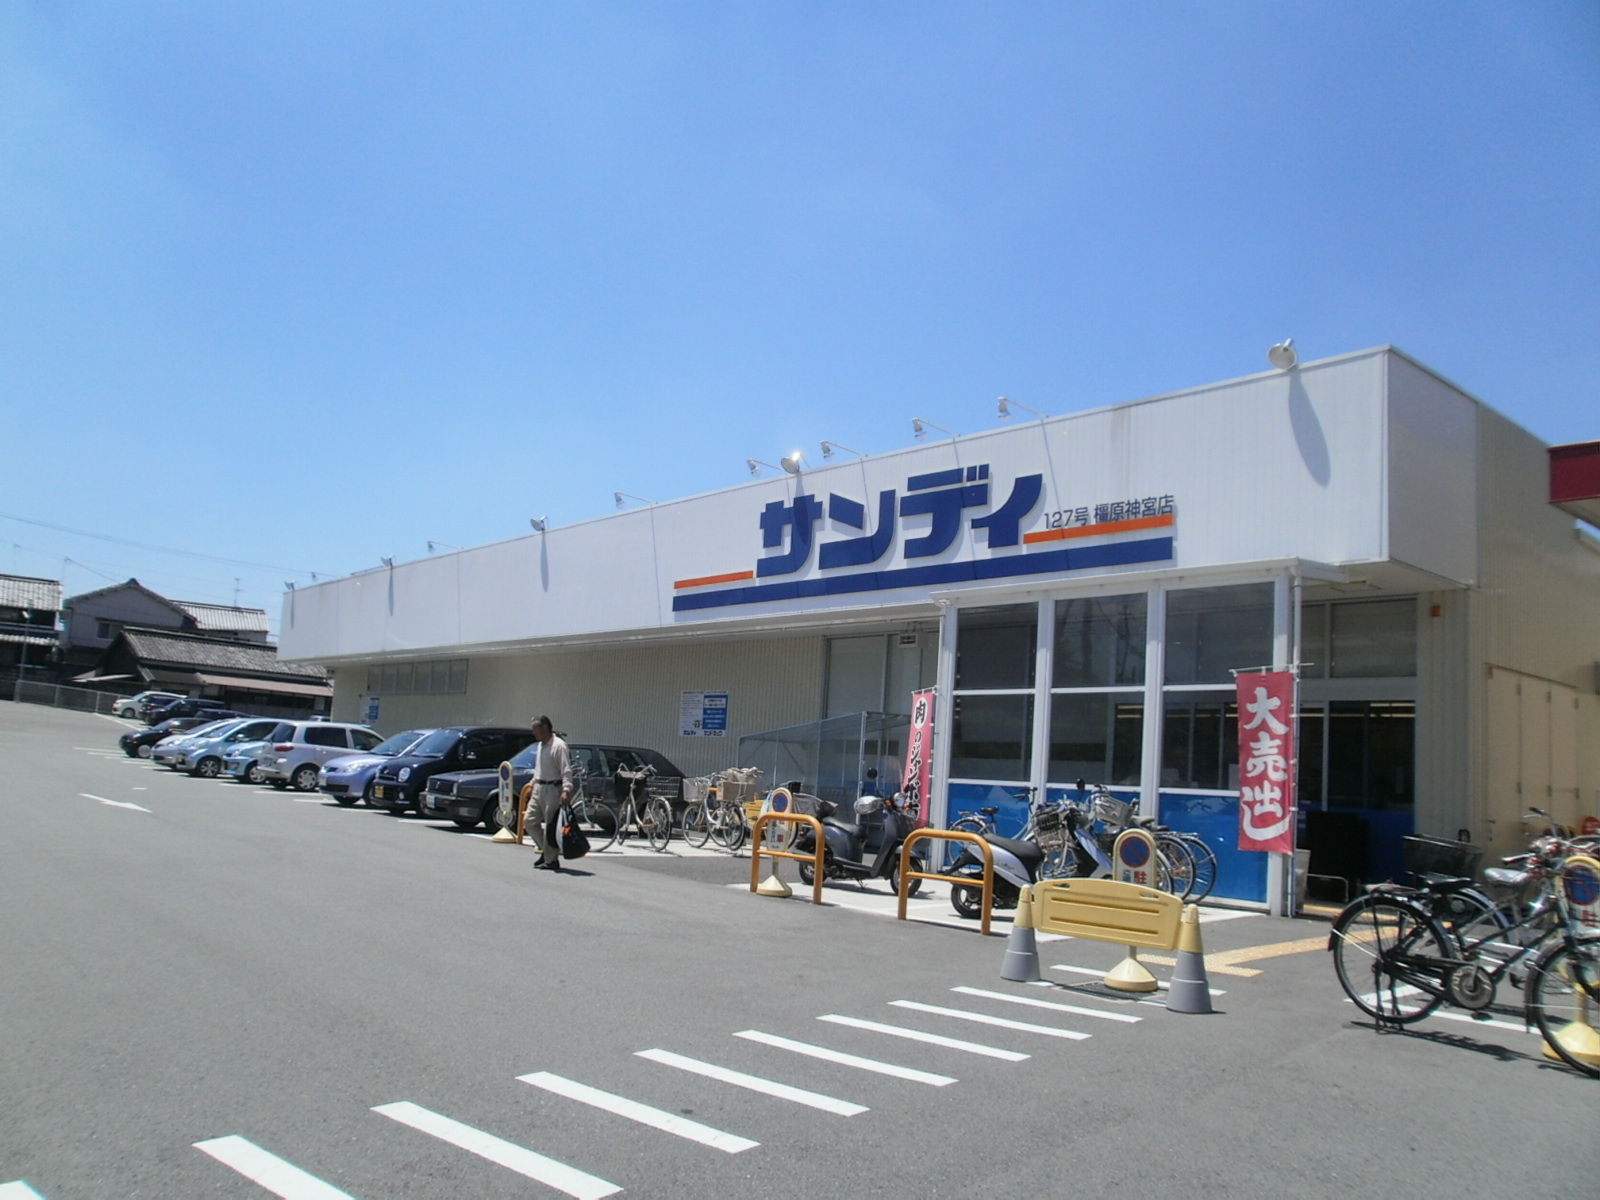 Supermarket. Sandy Kashihara 373m to the store (Super)